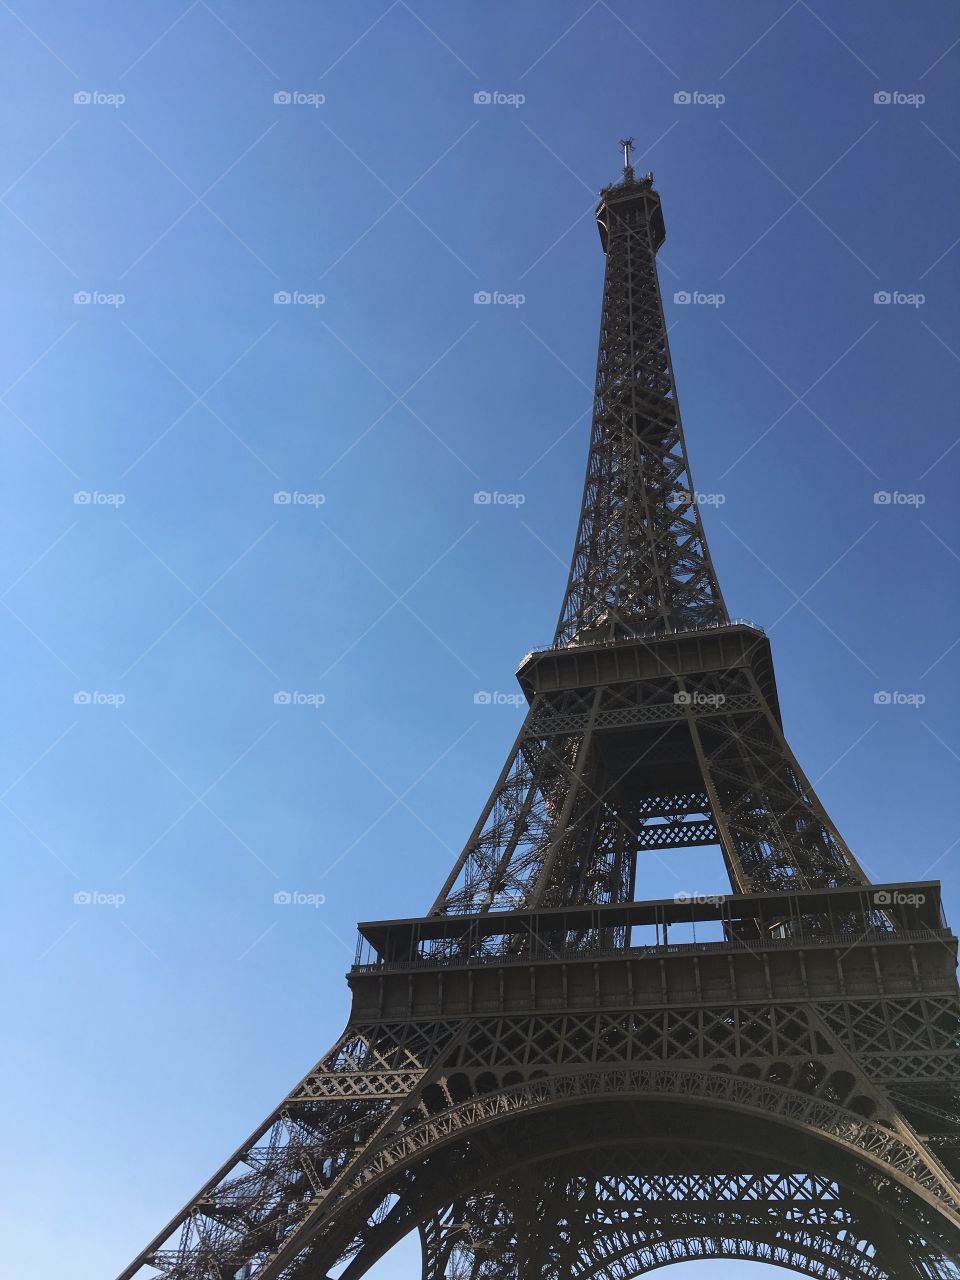 The Eiffel tower, Landmark of paris
